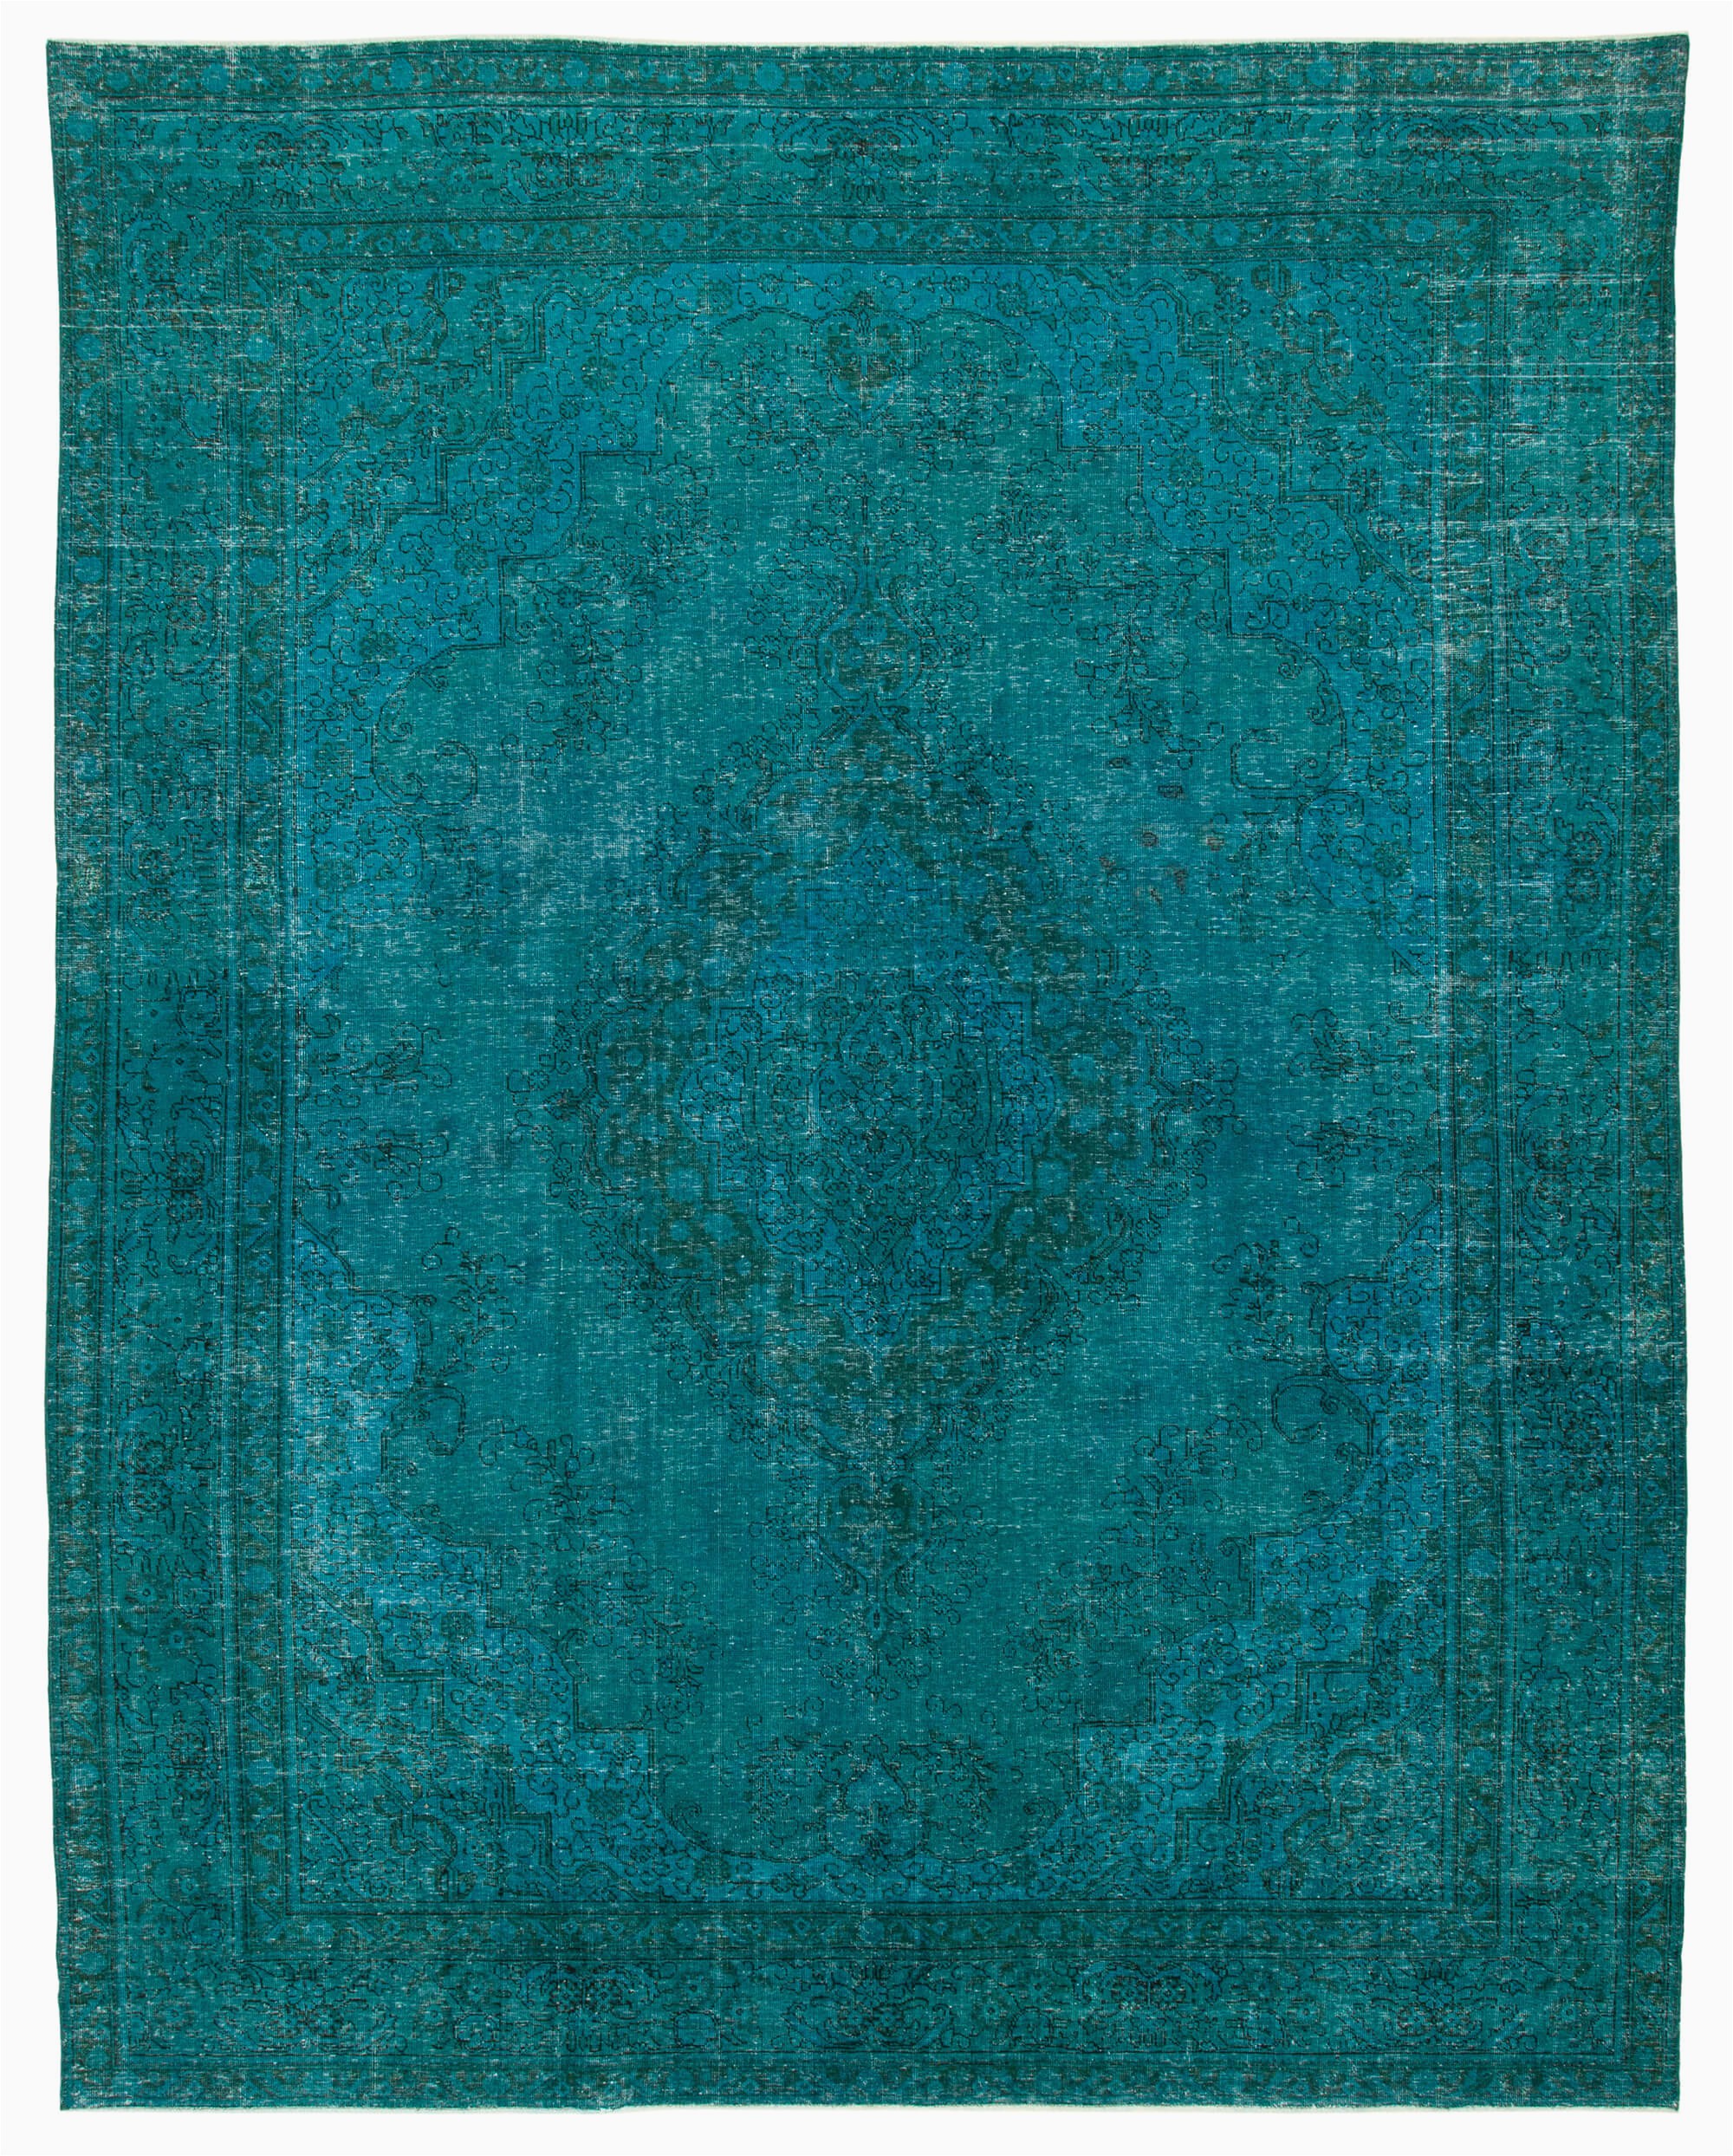 Large Teal Blue area Rugs 10×13 Turquoise oriental Wool area Rug 2324